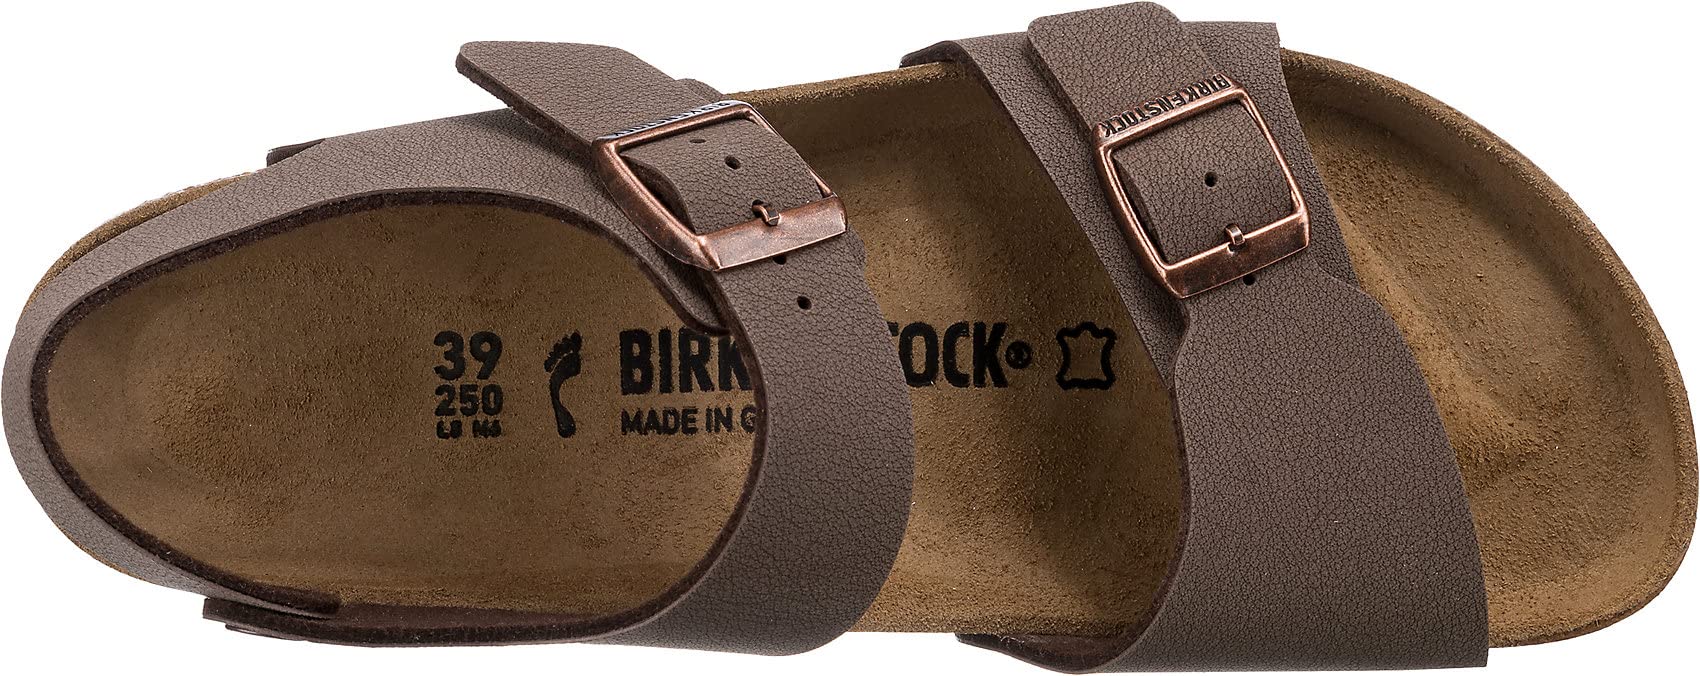 Birkenstock Unisex-Child New York Birko-Flor Style-no. 87033ren Suede Sandals